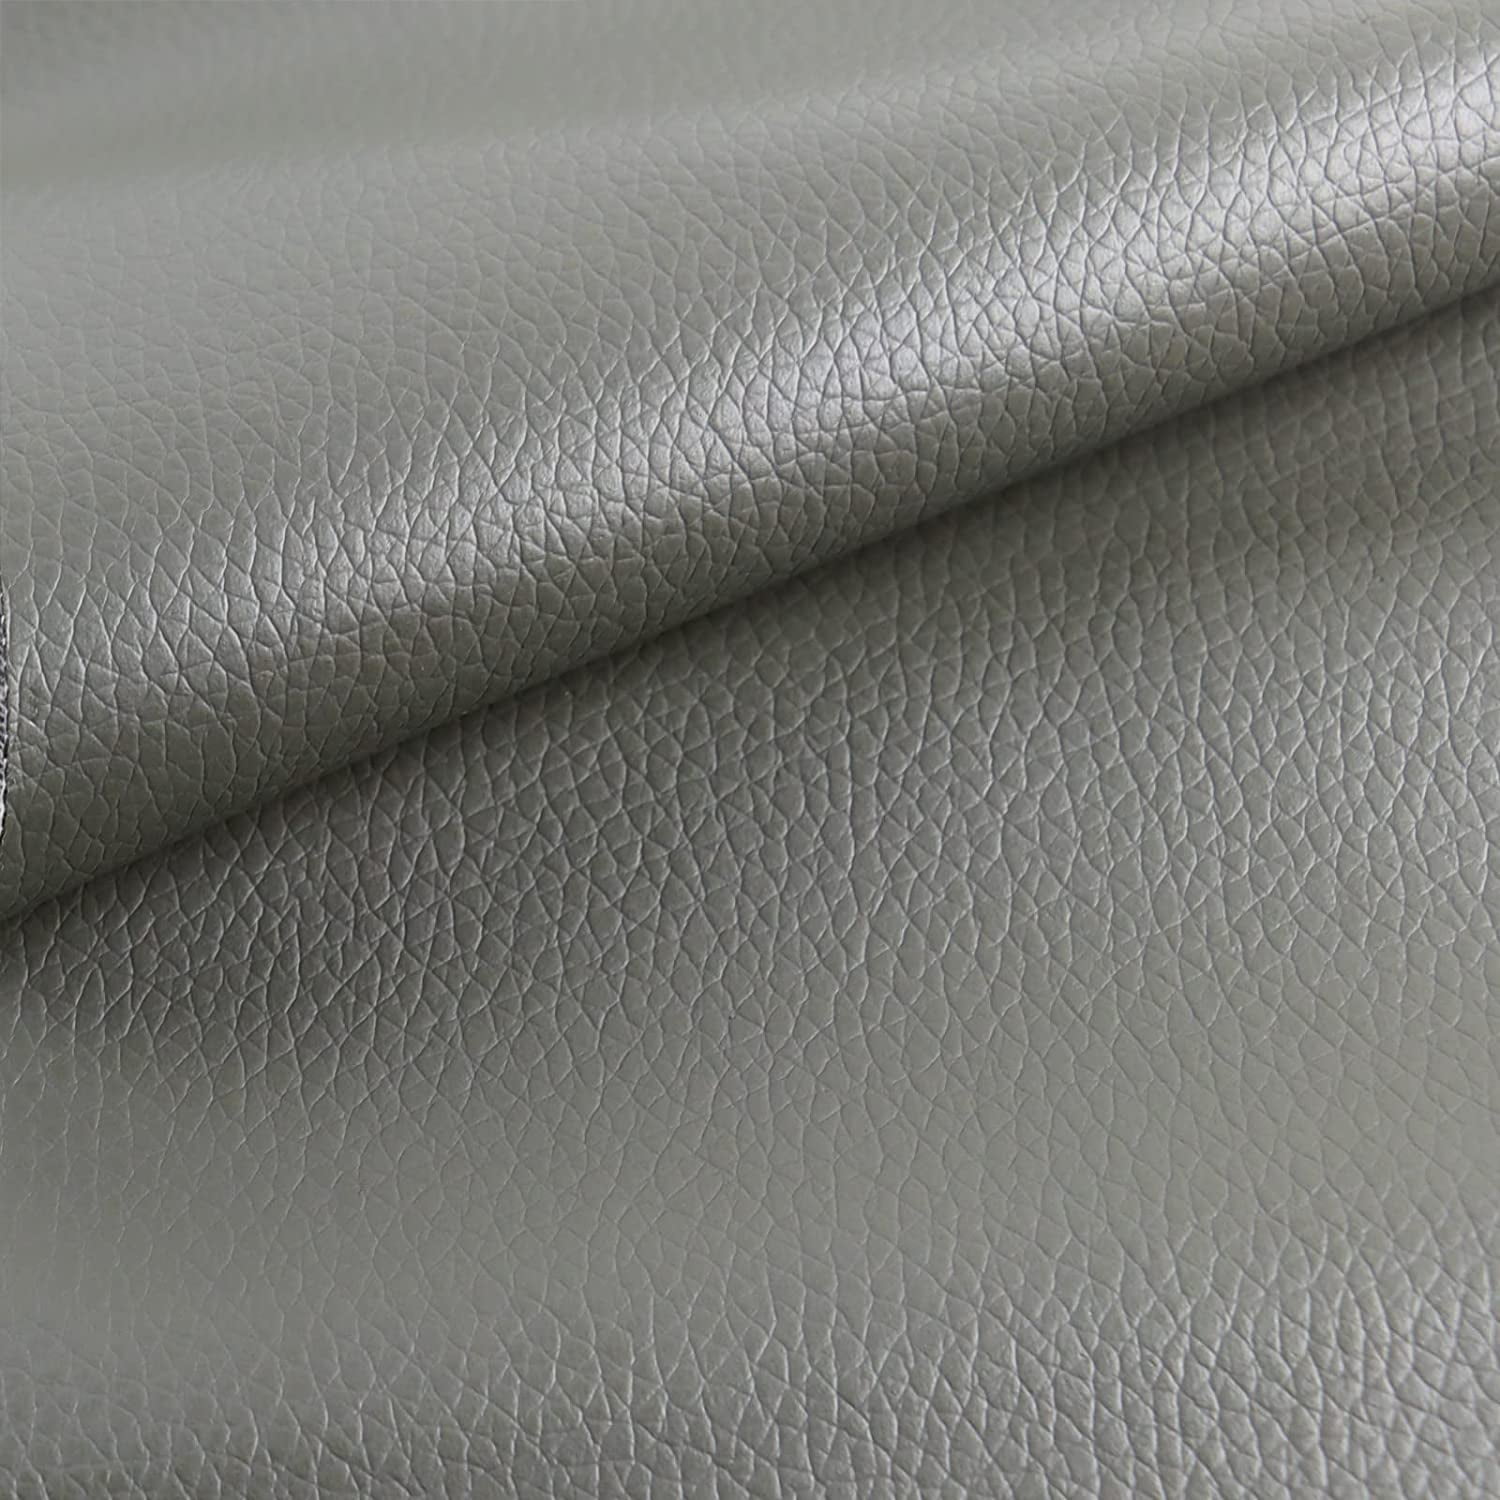 Apple Polishing Cloth teardown: 'Intricately' woven, synthetic leather feel